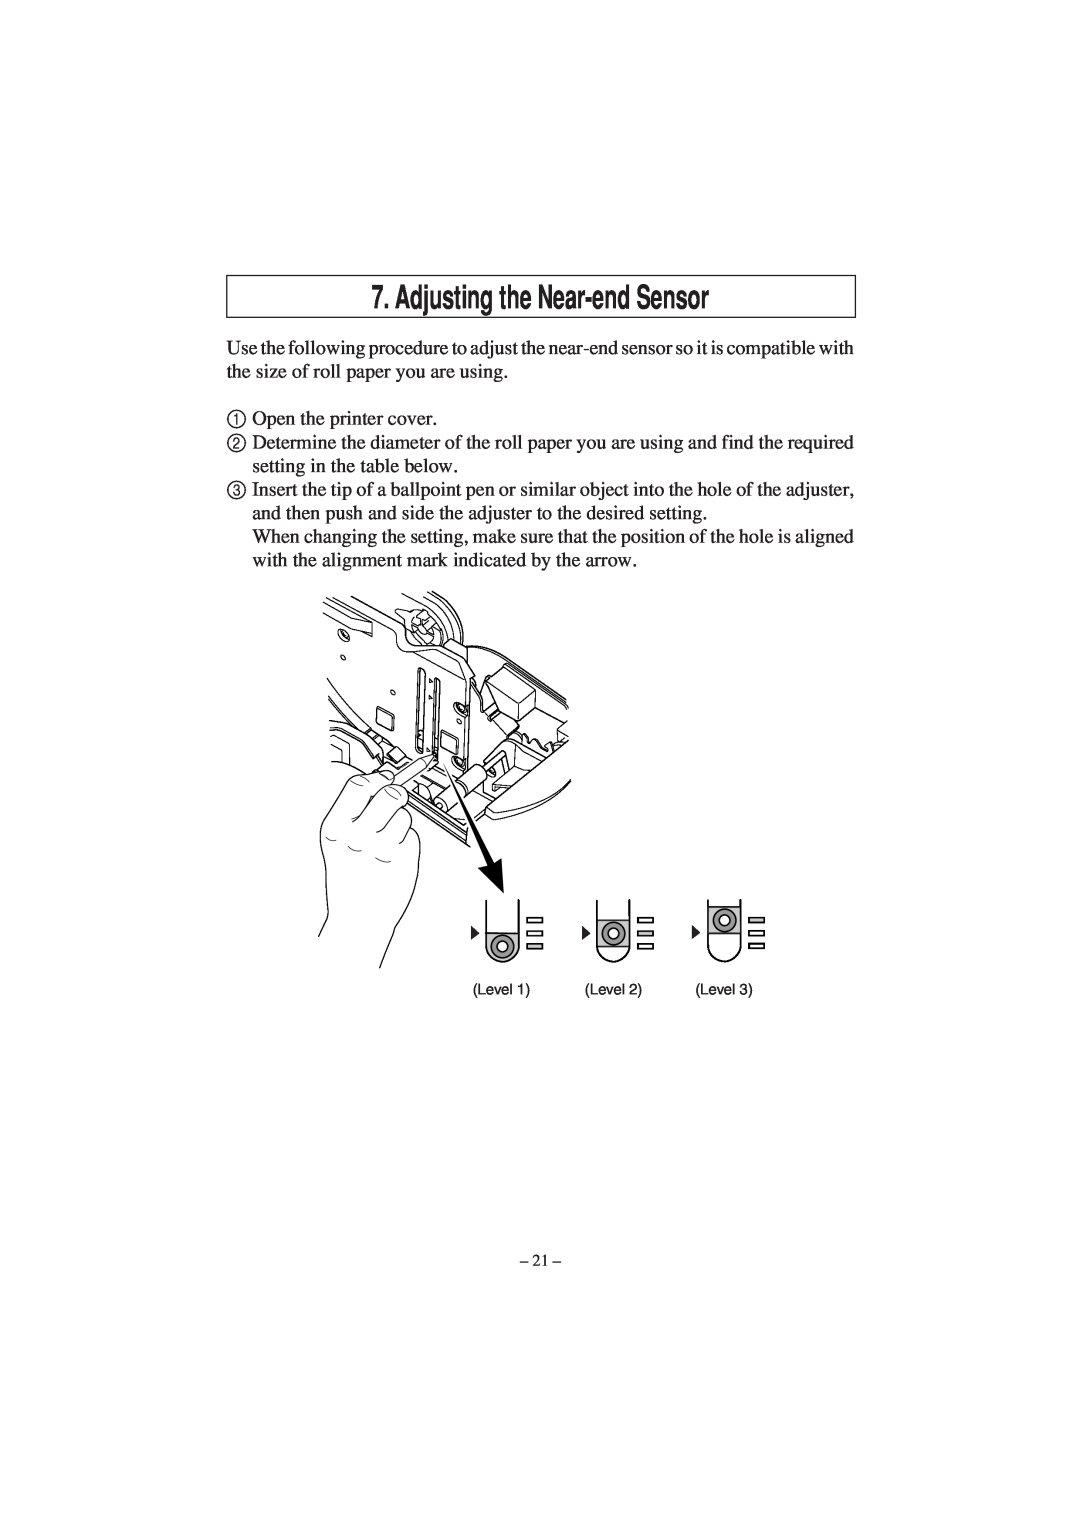 Star Micronics TSP1000 user manual Adjusting the Near-end Sensor 